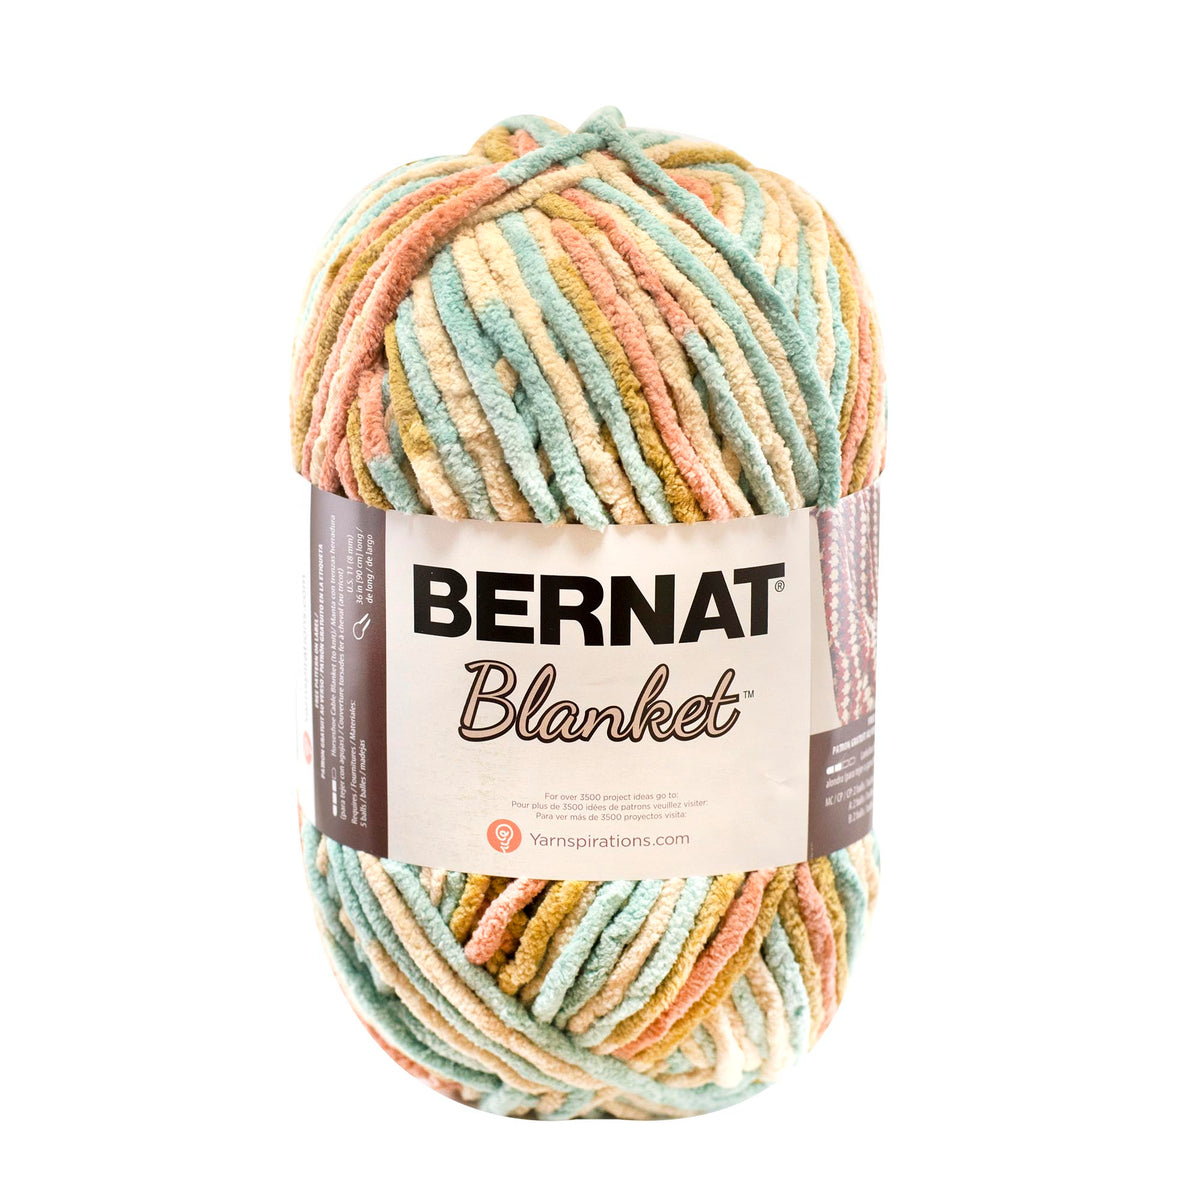 Bernat® Blanket Big™ Yarn, 32 Yards, Taupe Gray 100%Polyester, Set 0f 2,  New